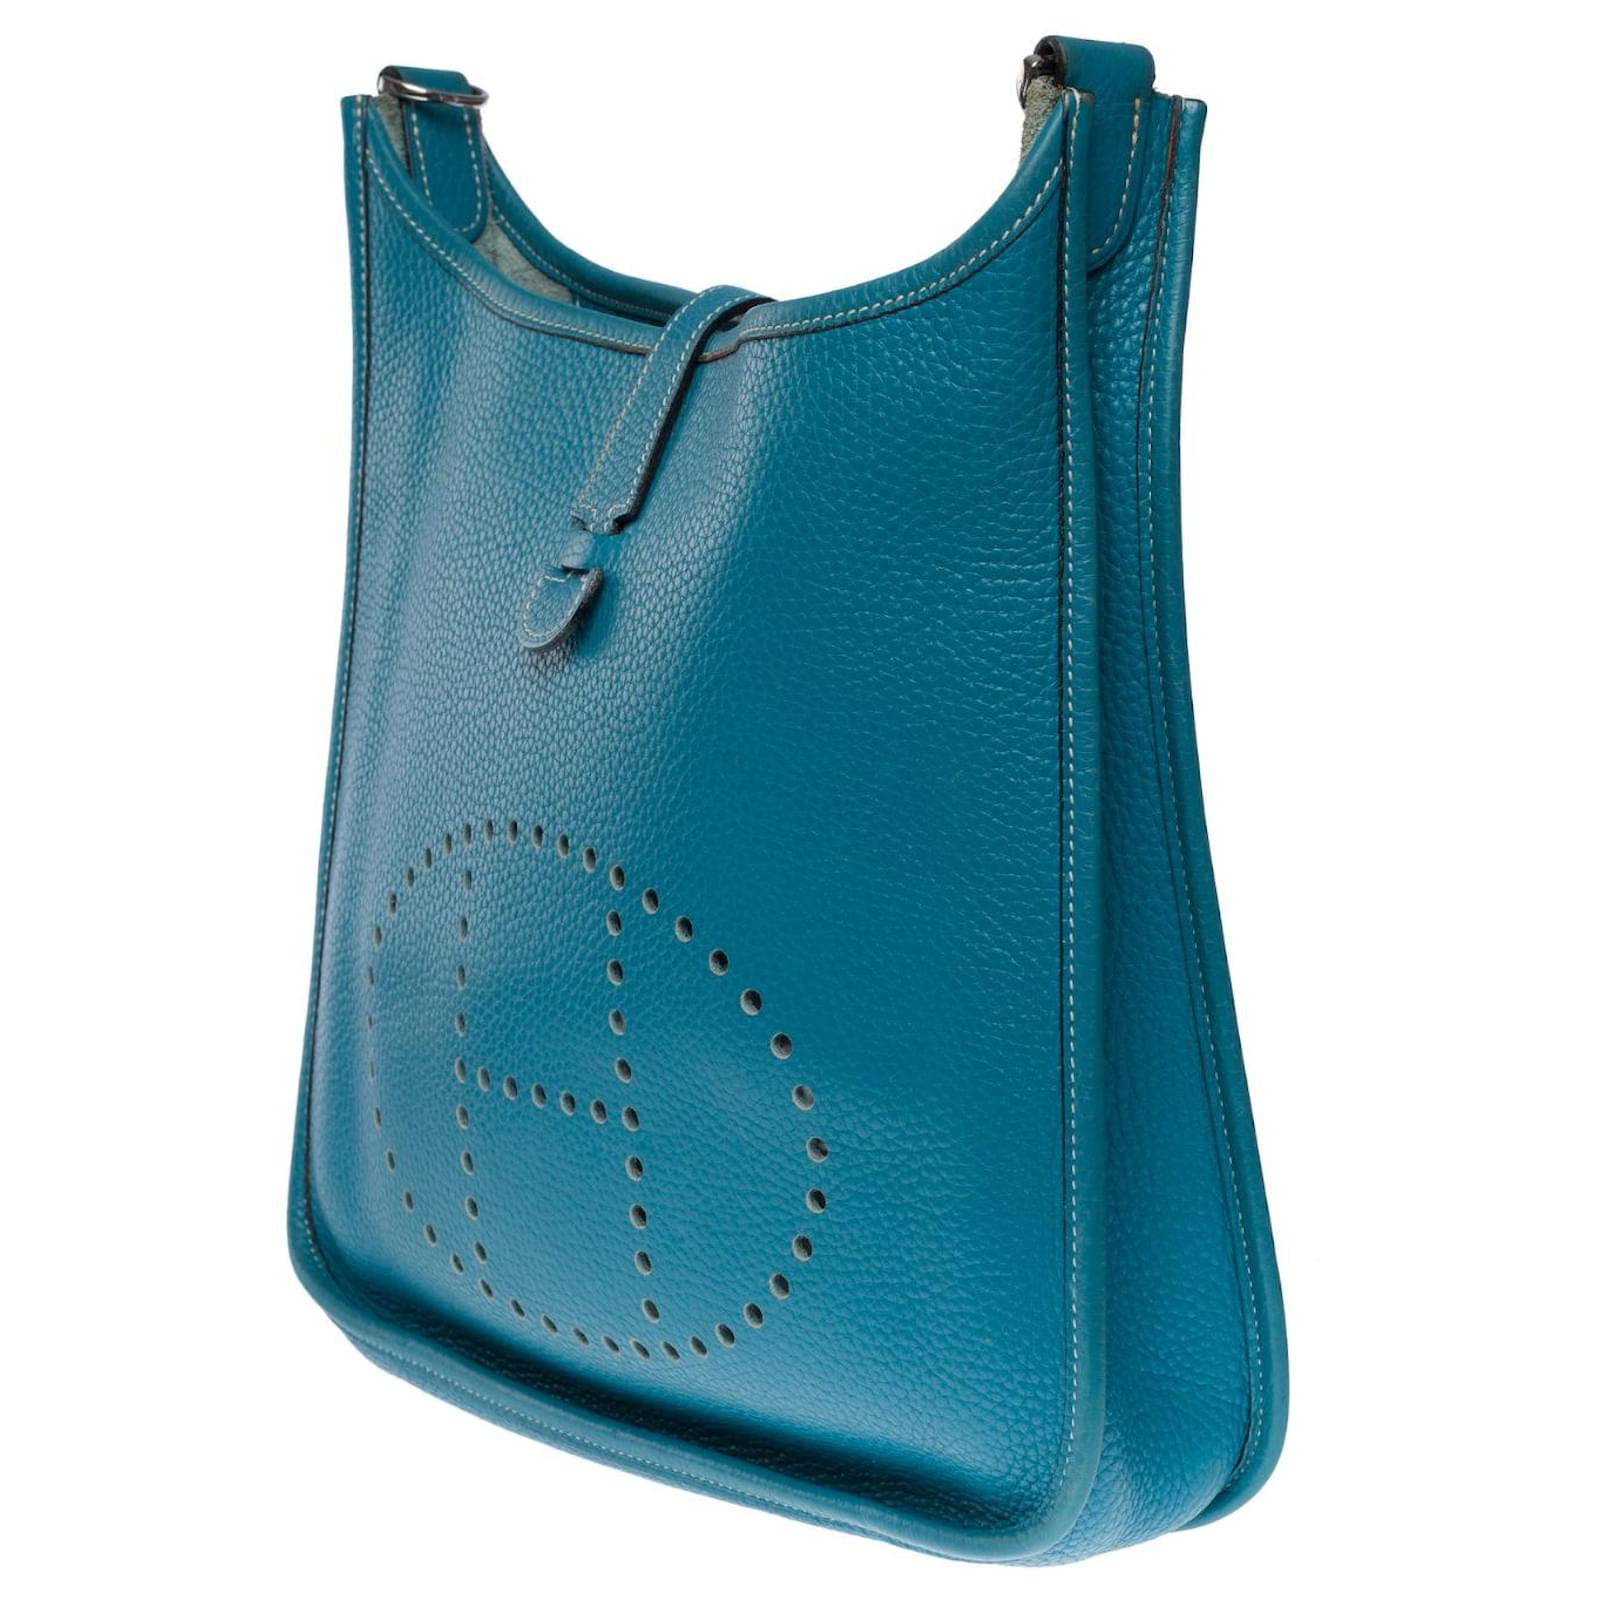 Authentic! Hermes Evelyne Blue Jean Clemence Leather PM Handbag Purse